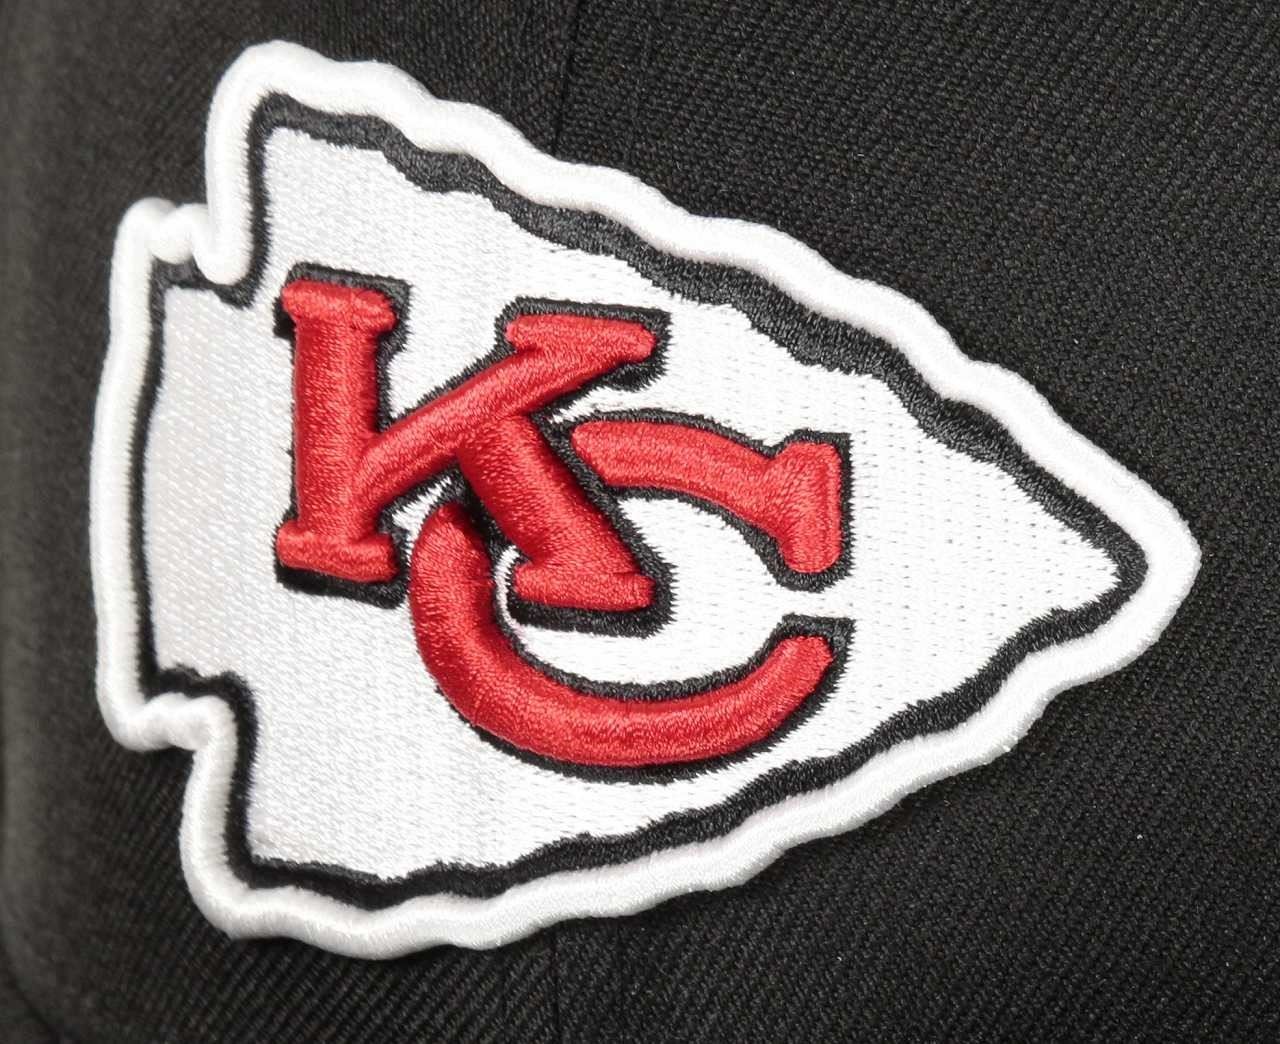 Kansas City Chiefs NFL Essential Black 9Fifty Snapback Cap New Era